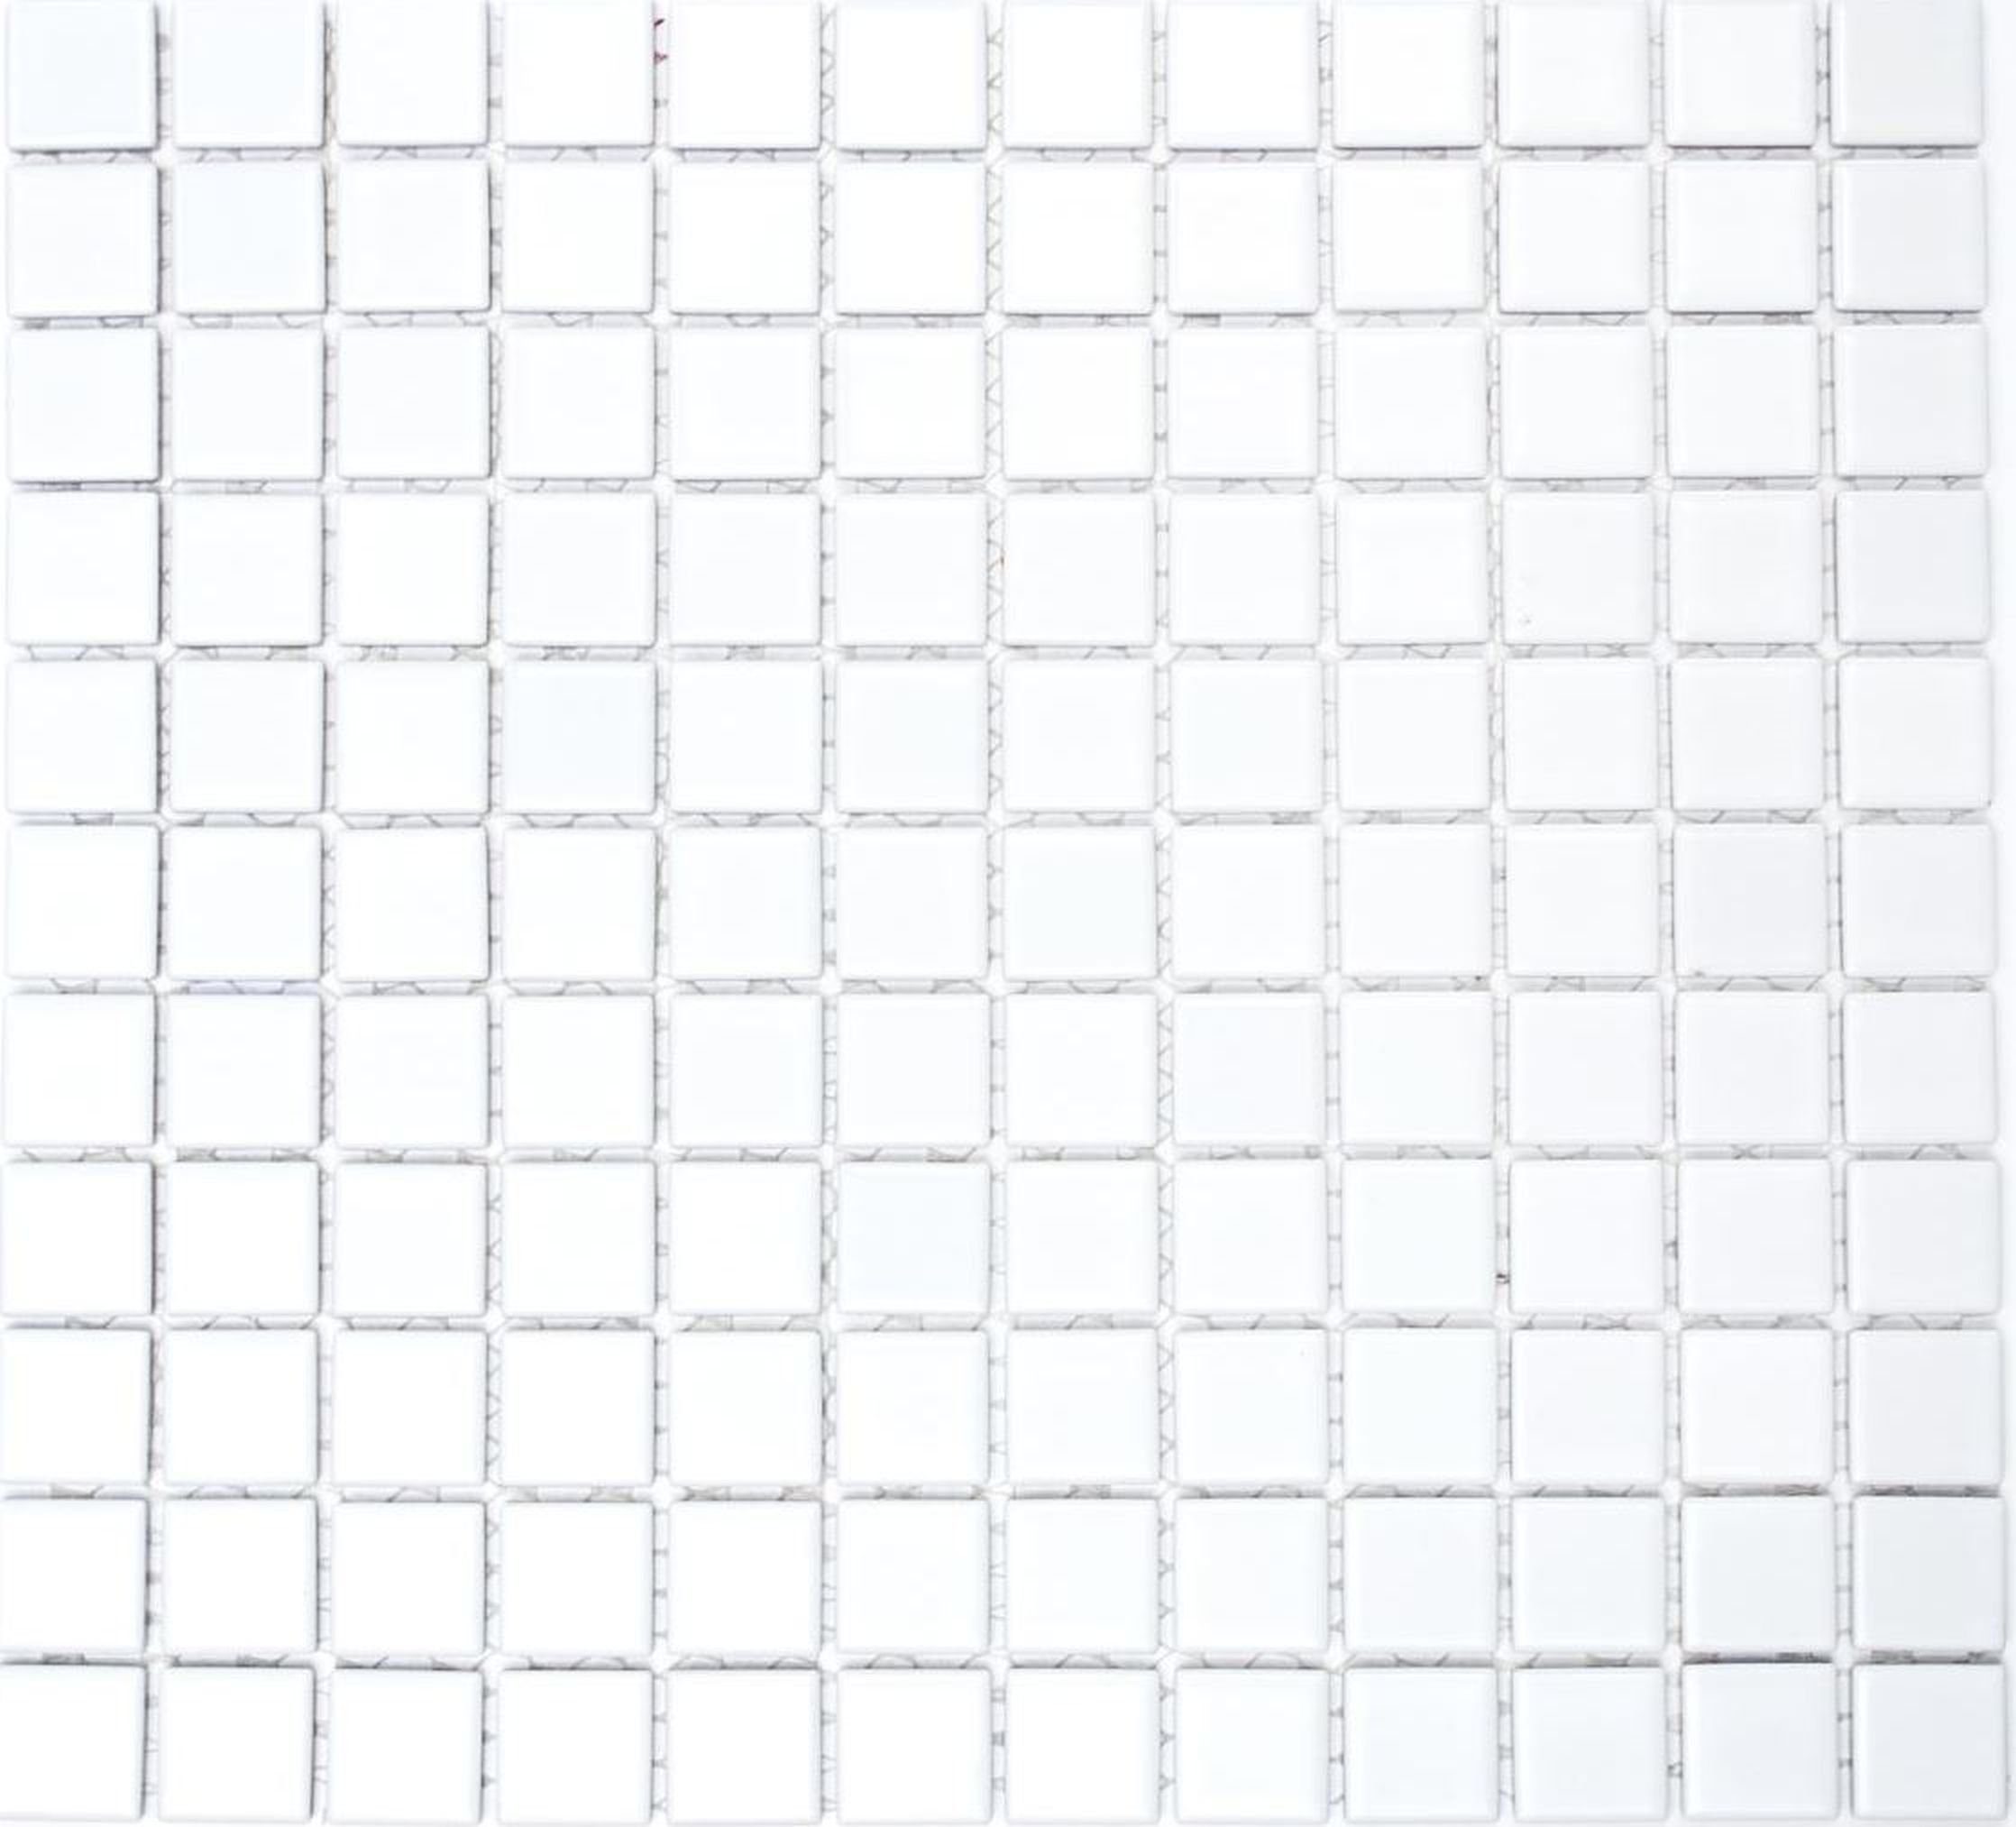 Pool Mosaikfliesen Keramikmosaik Dusche weiß Wand glänzend Mosani Mosaikfliesen Küche